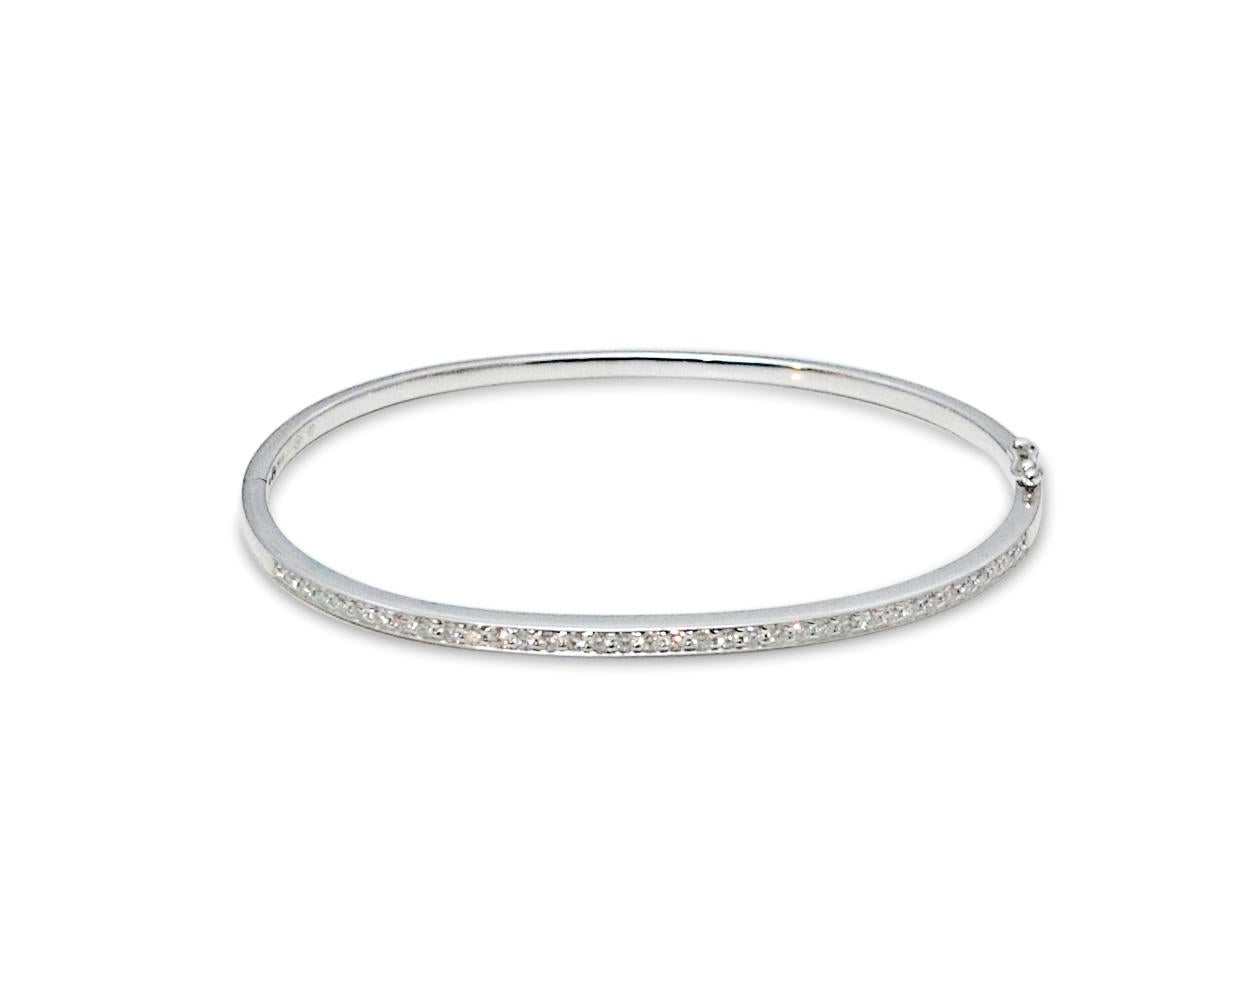 Beautiful 36 diamonds half-paved 18 carats white gold 750 / 1000eme bangle bracelet.

Weight of diamonds: 0.53 carats

Width of bracelet: 19cm

Secure double-click clasp with safety valve.